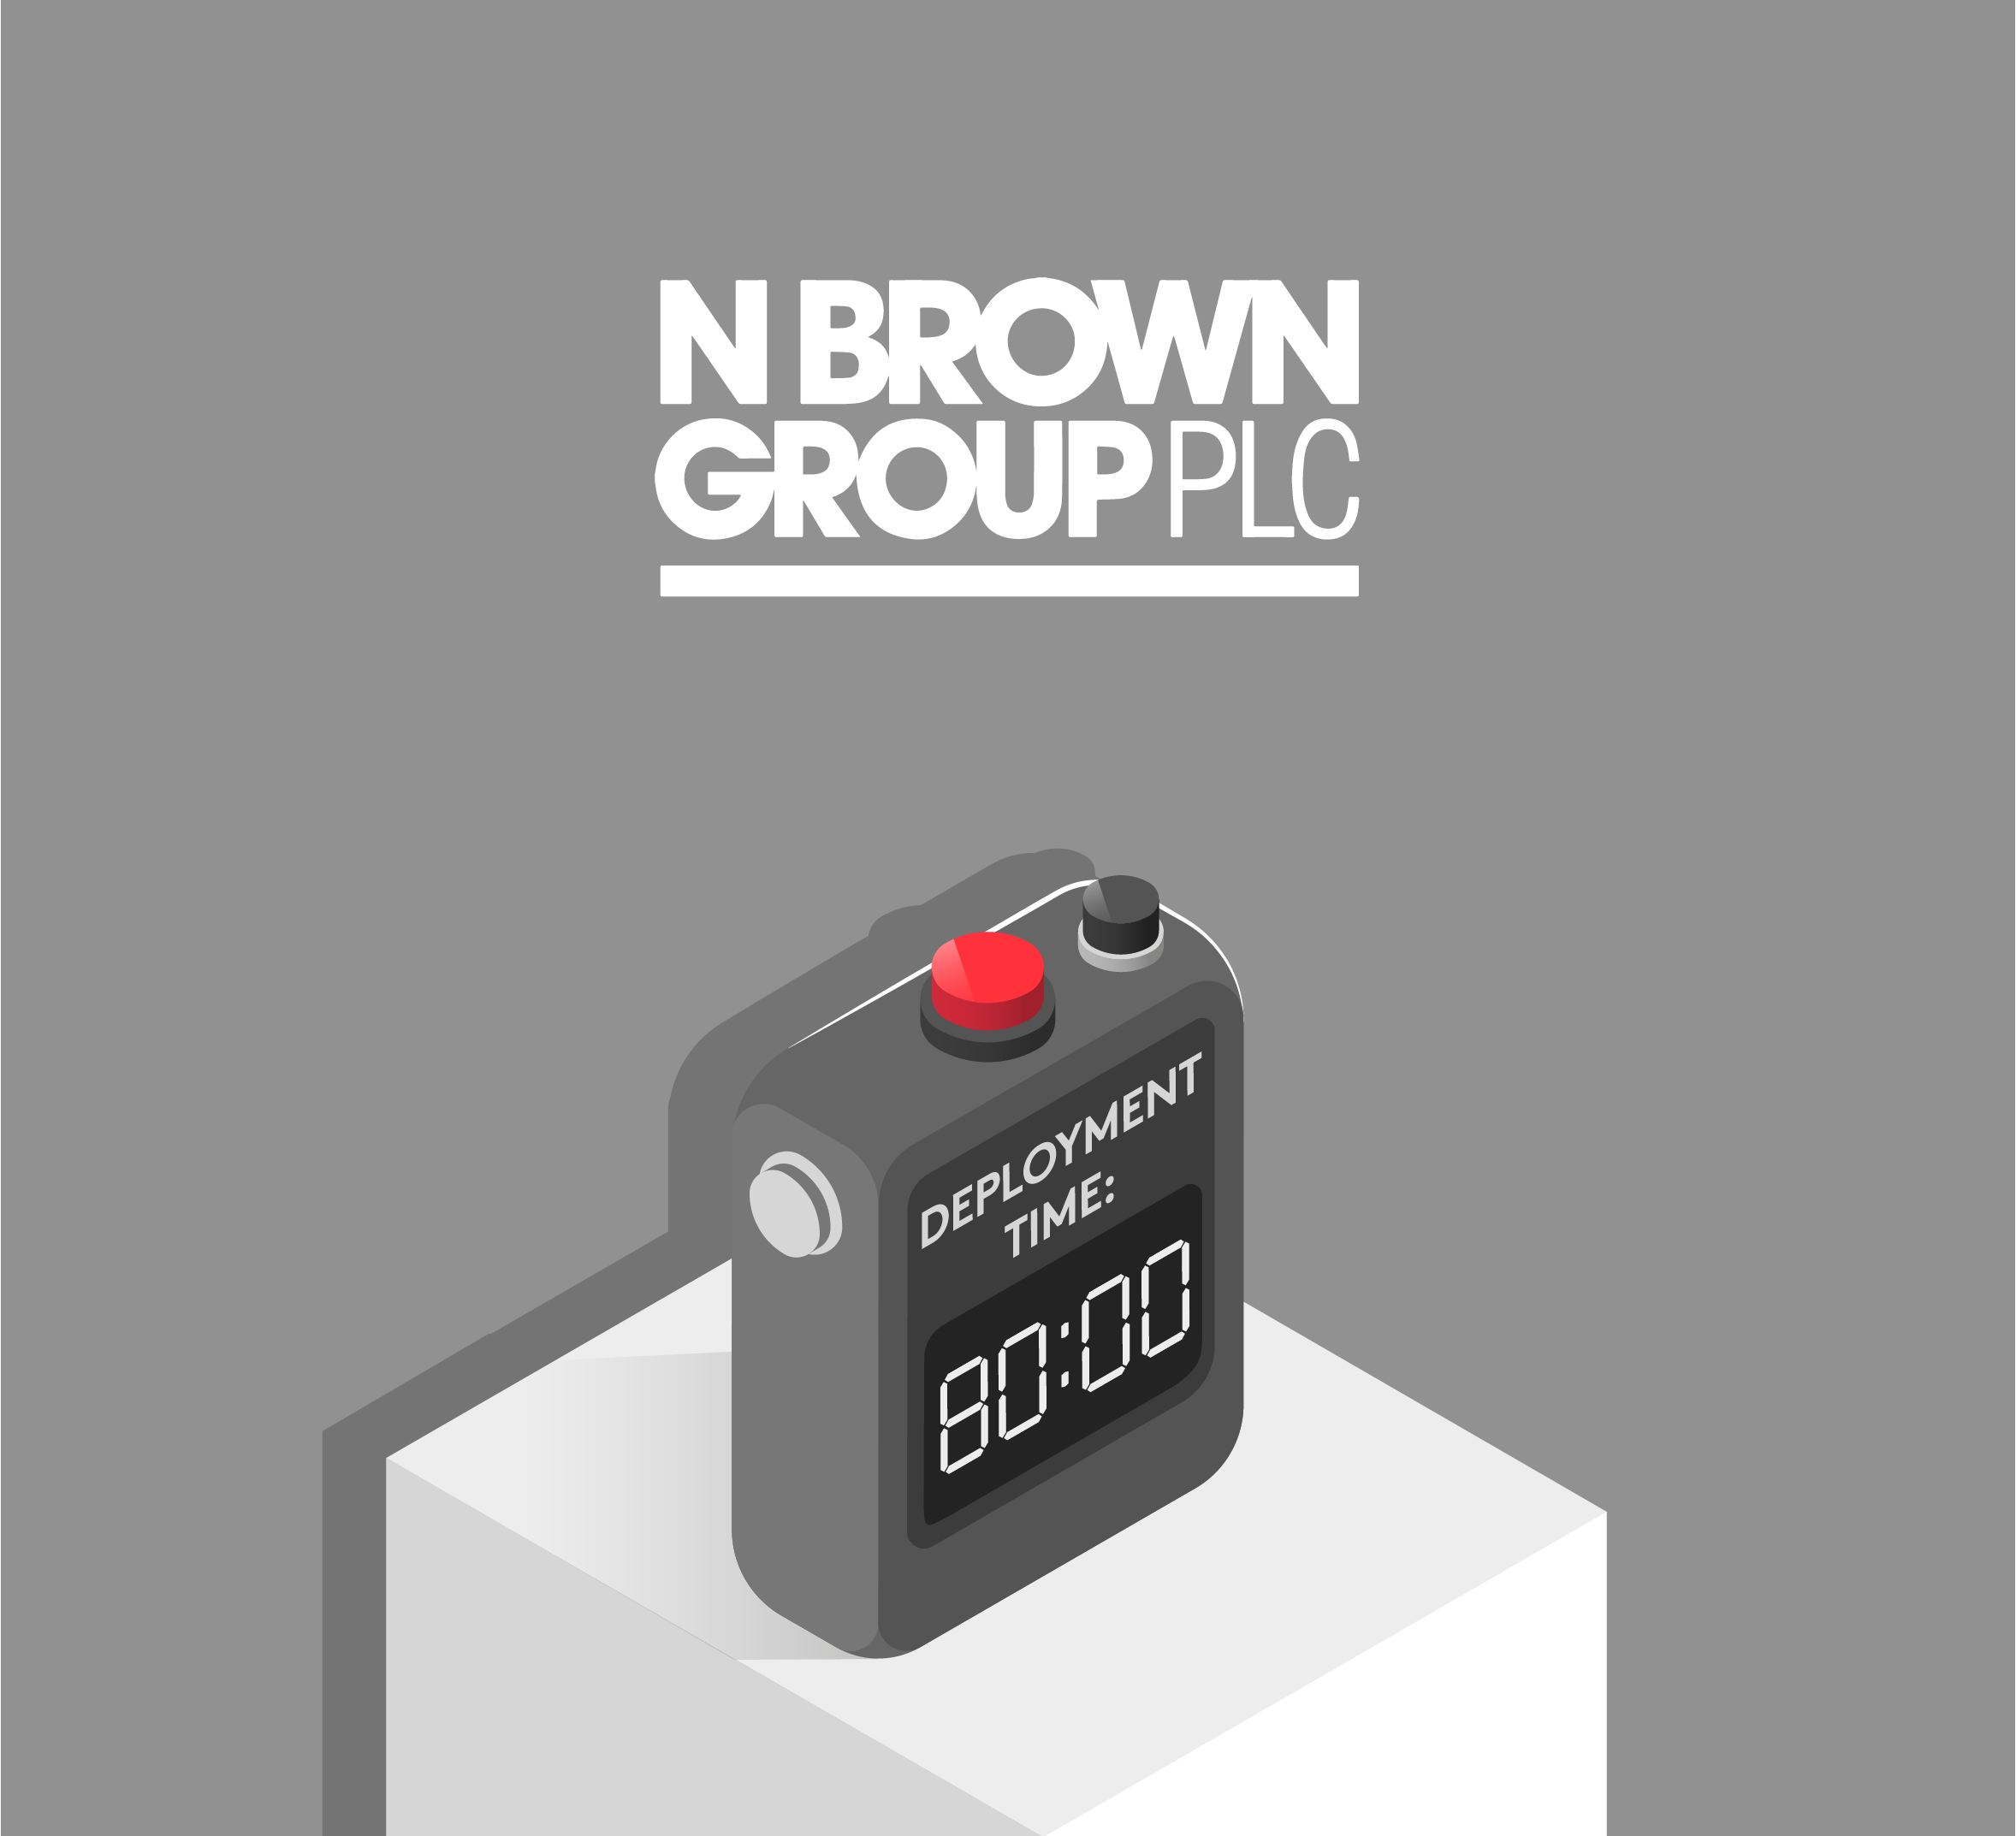 Nbrown group_card -04